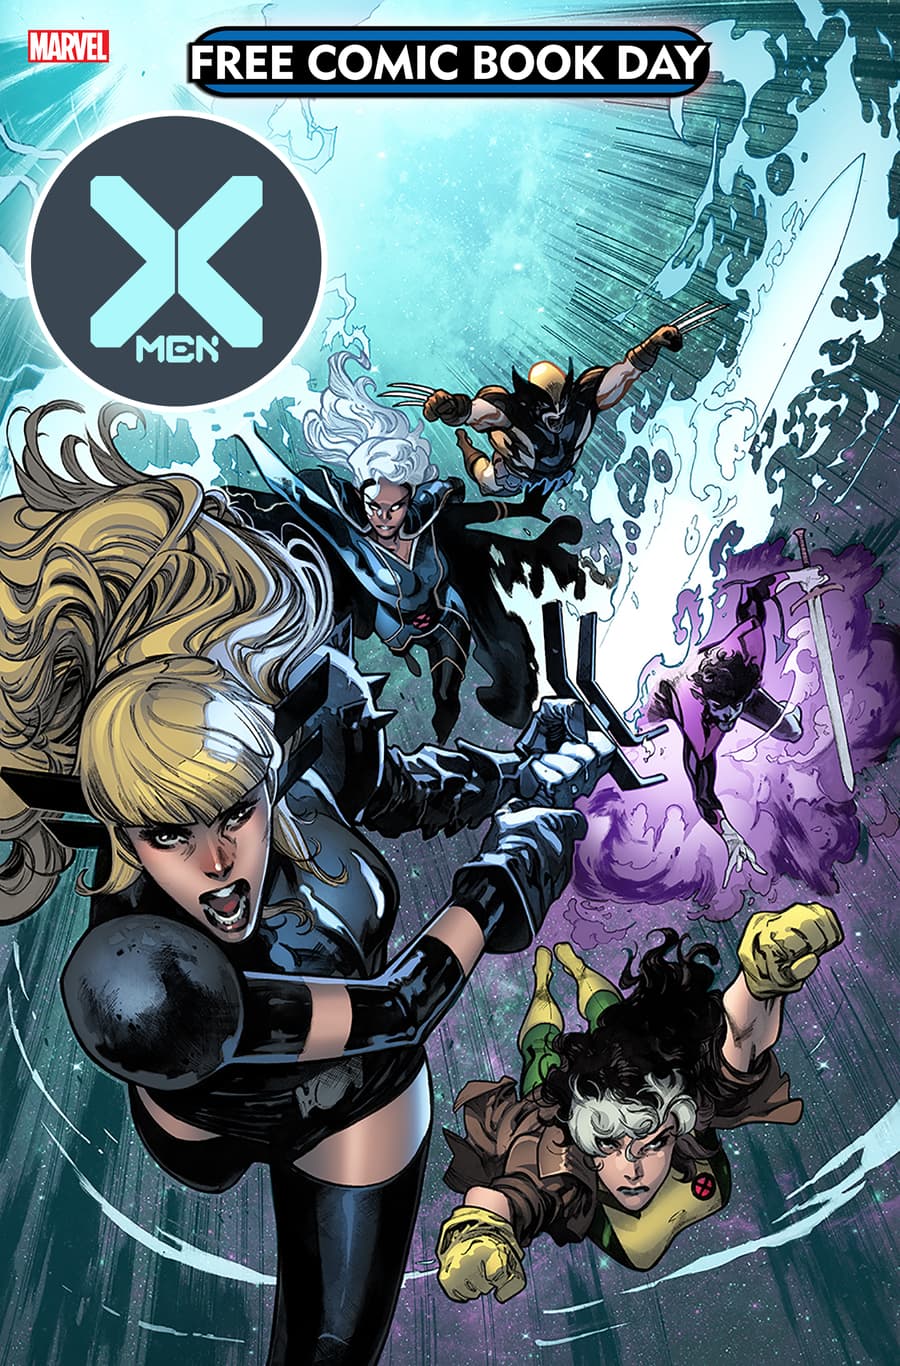 FREE COMIC BOOK DAY 2020: X-MEN